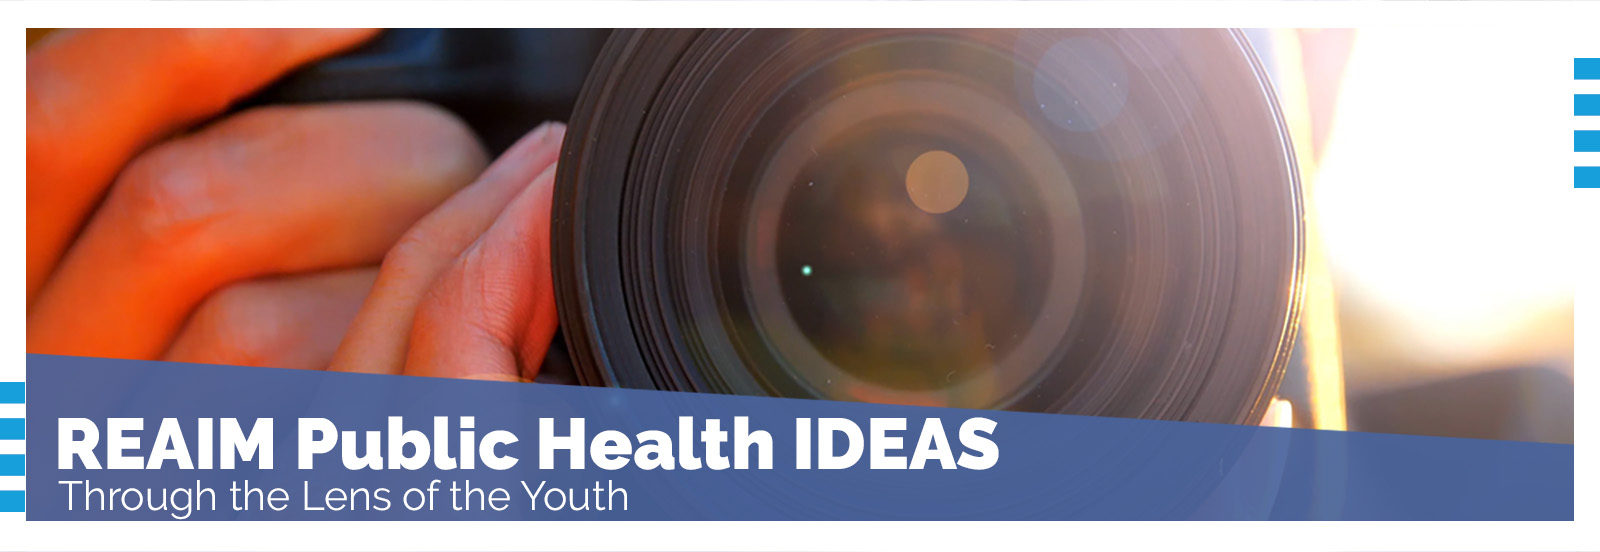 REAIM Public Health IDEAS - Through the Lens of the Youth